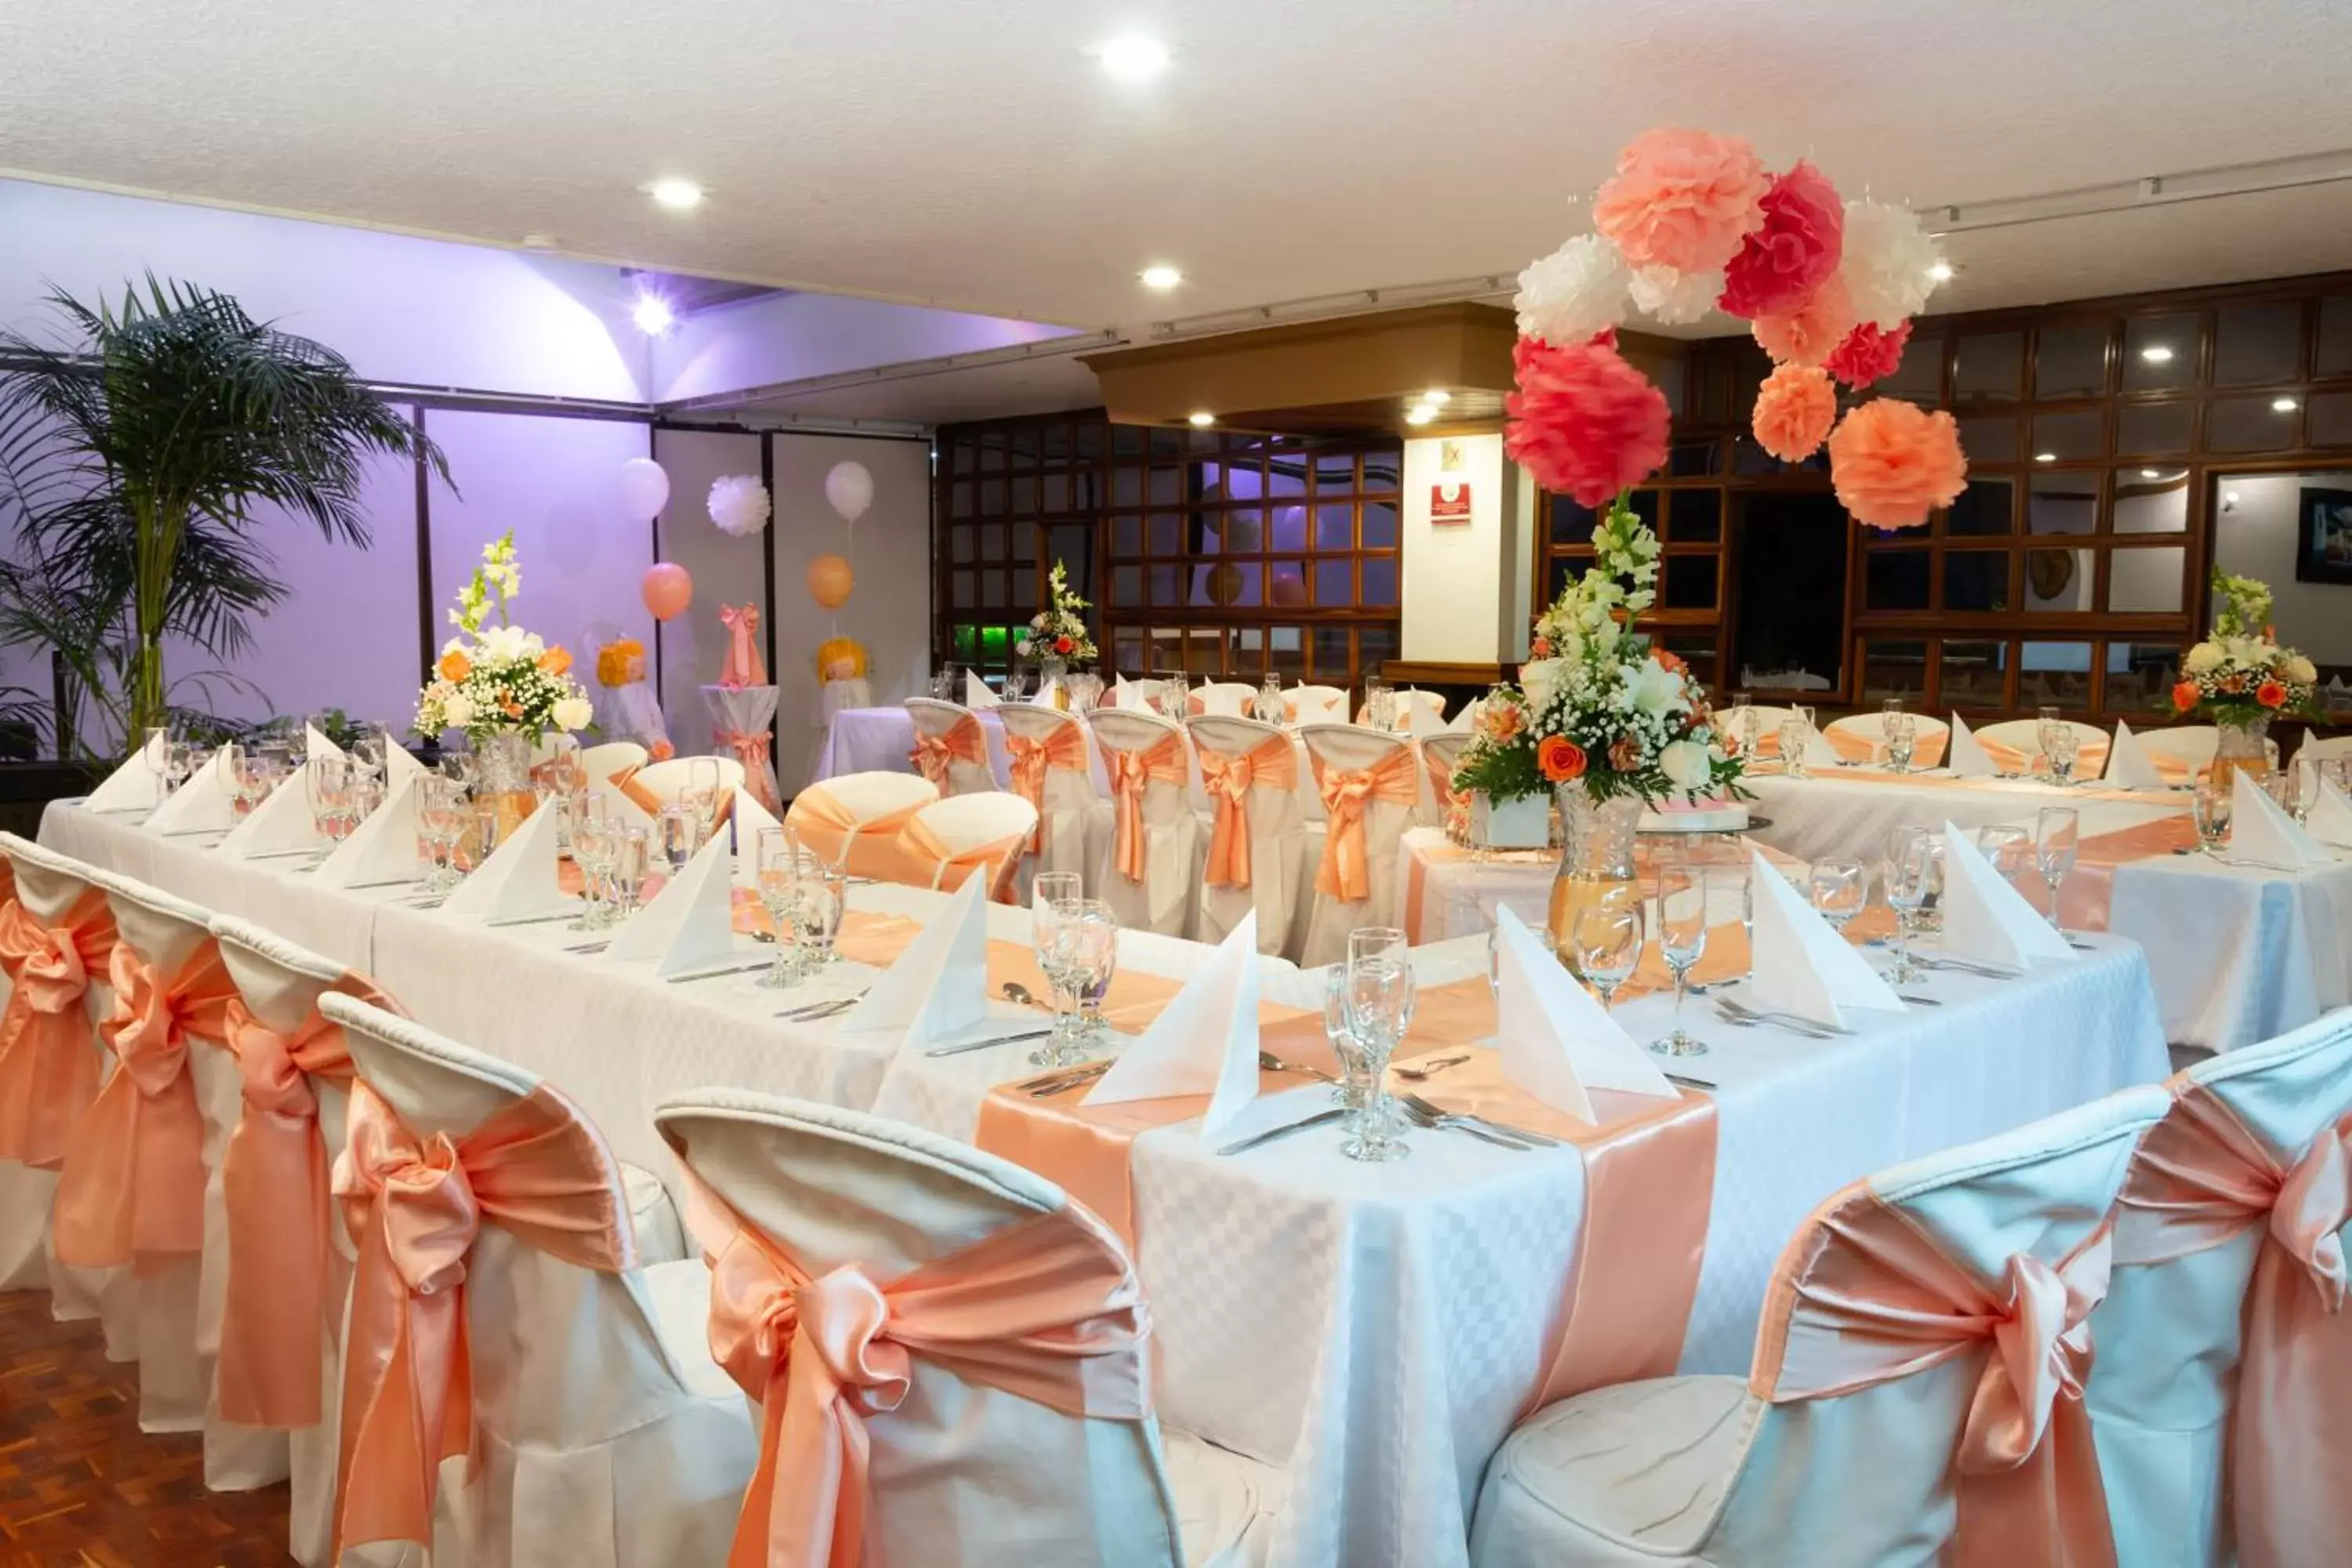 Banquet/Function facilities, Banquet Facilities in Hotel Don Saul